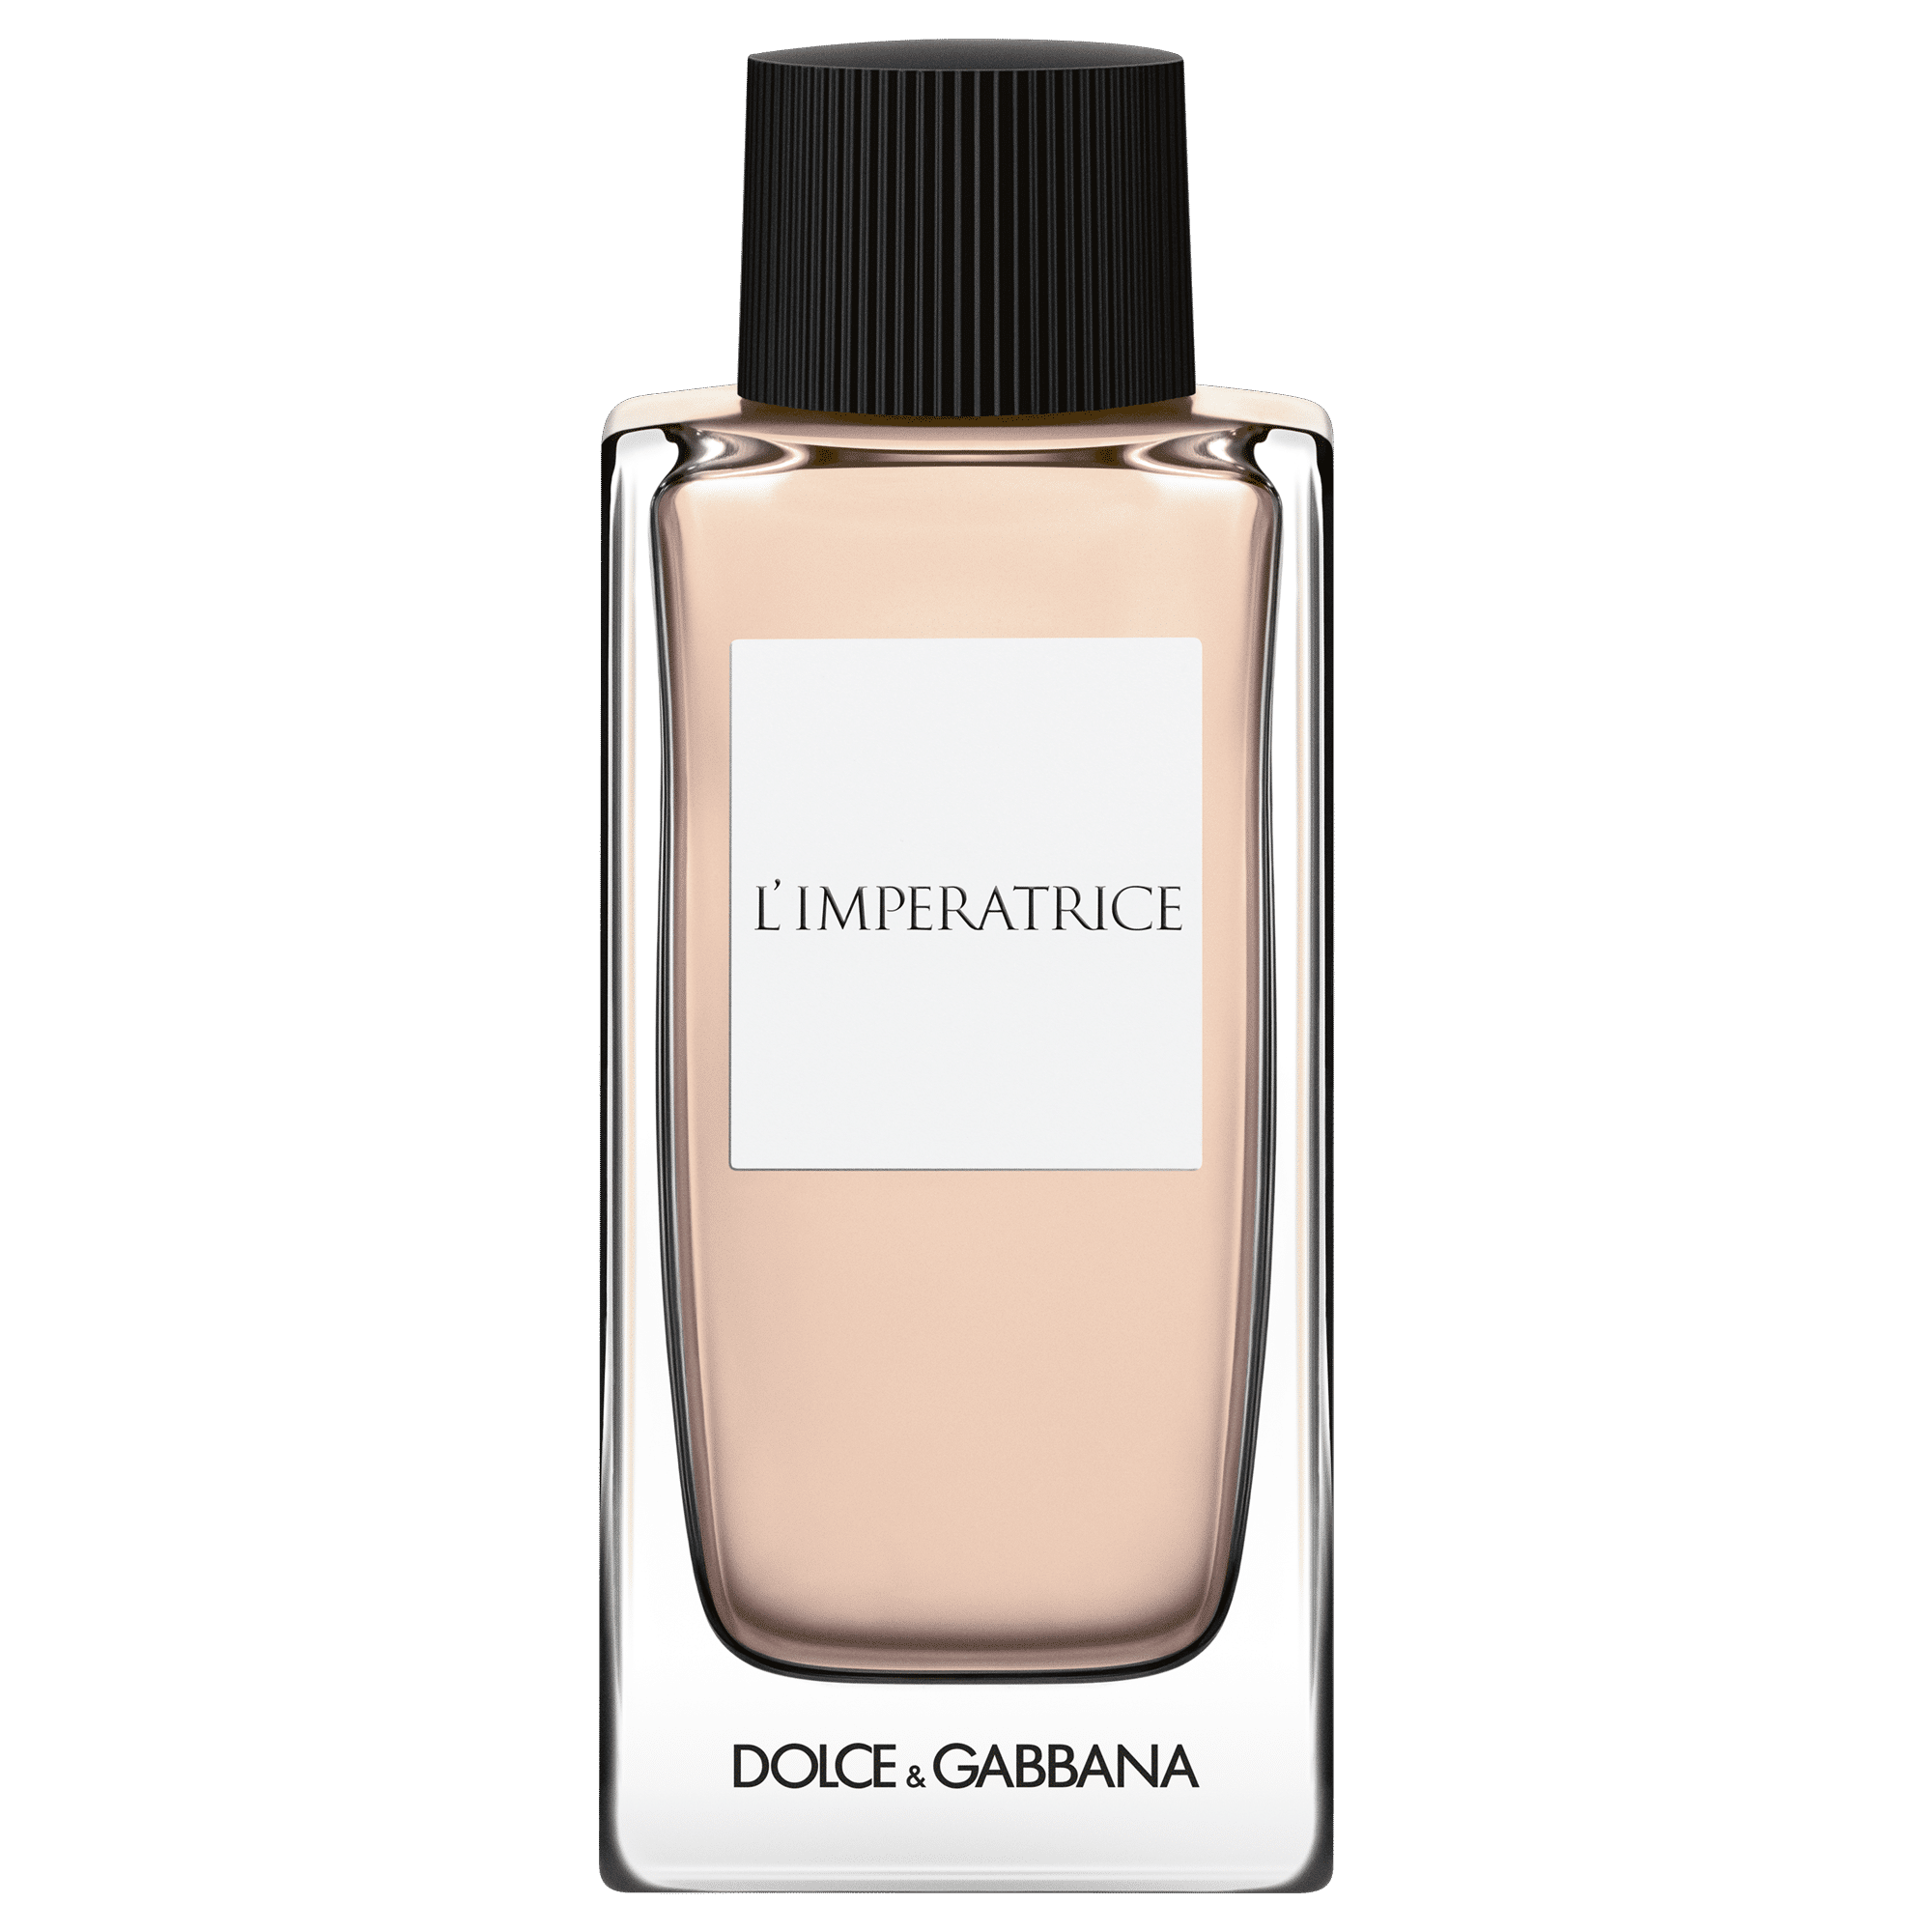 Dolce & Gabbana L'Imperatrice Eau de toilette spray 100 ml